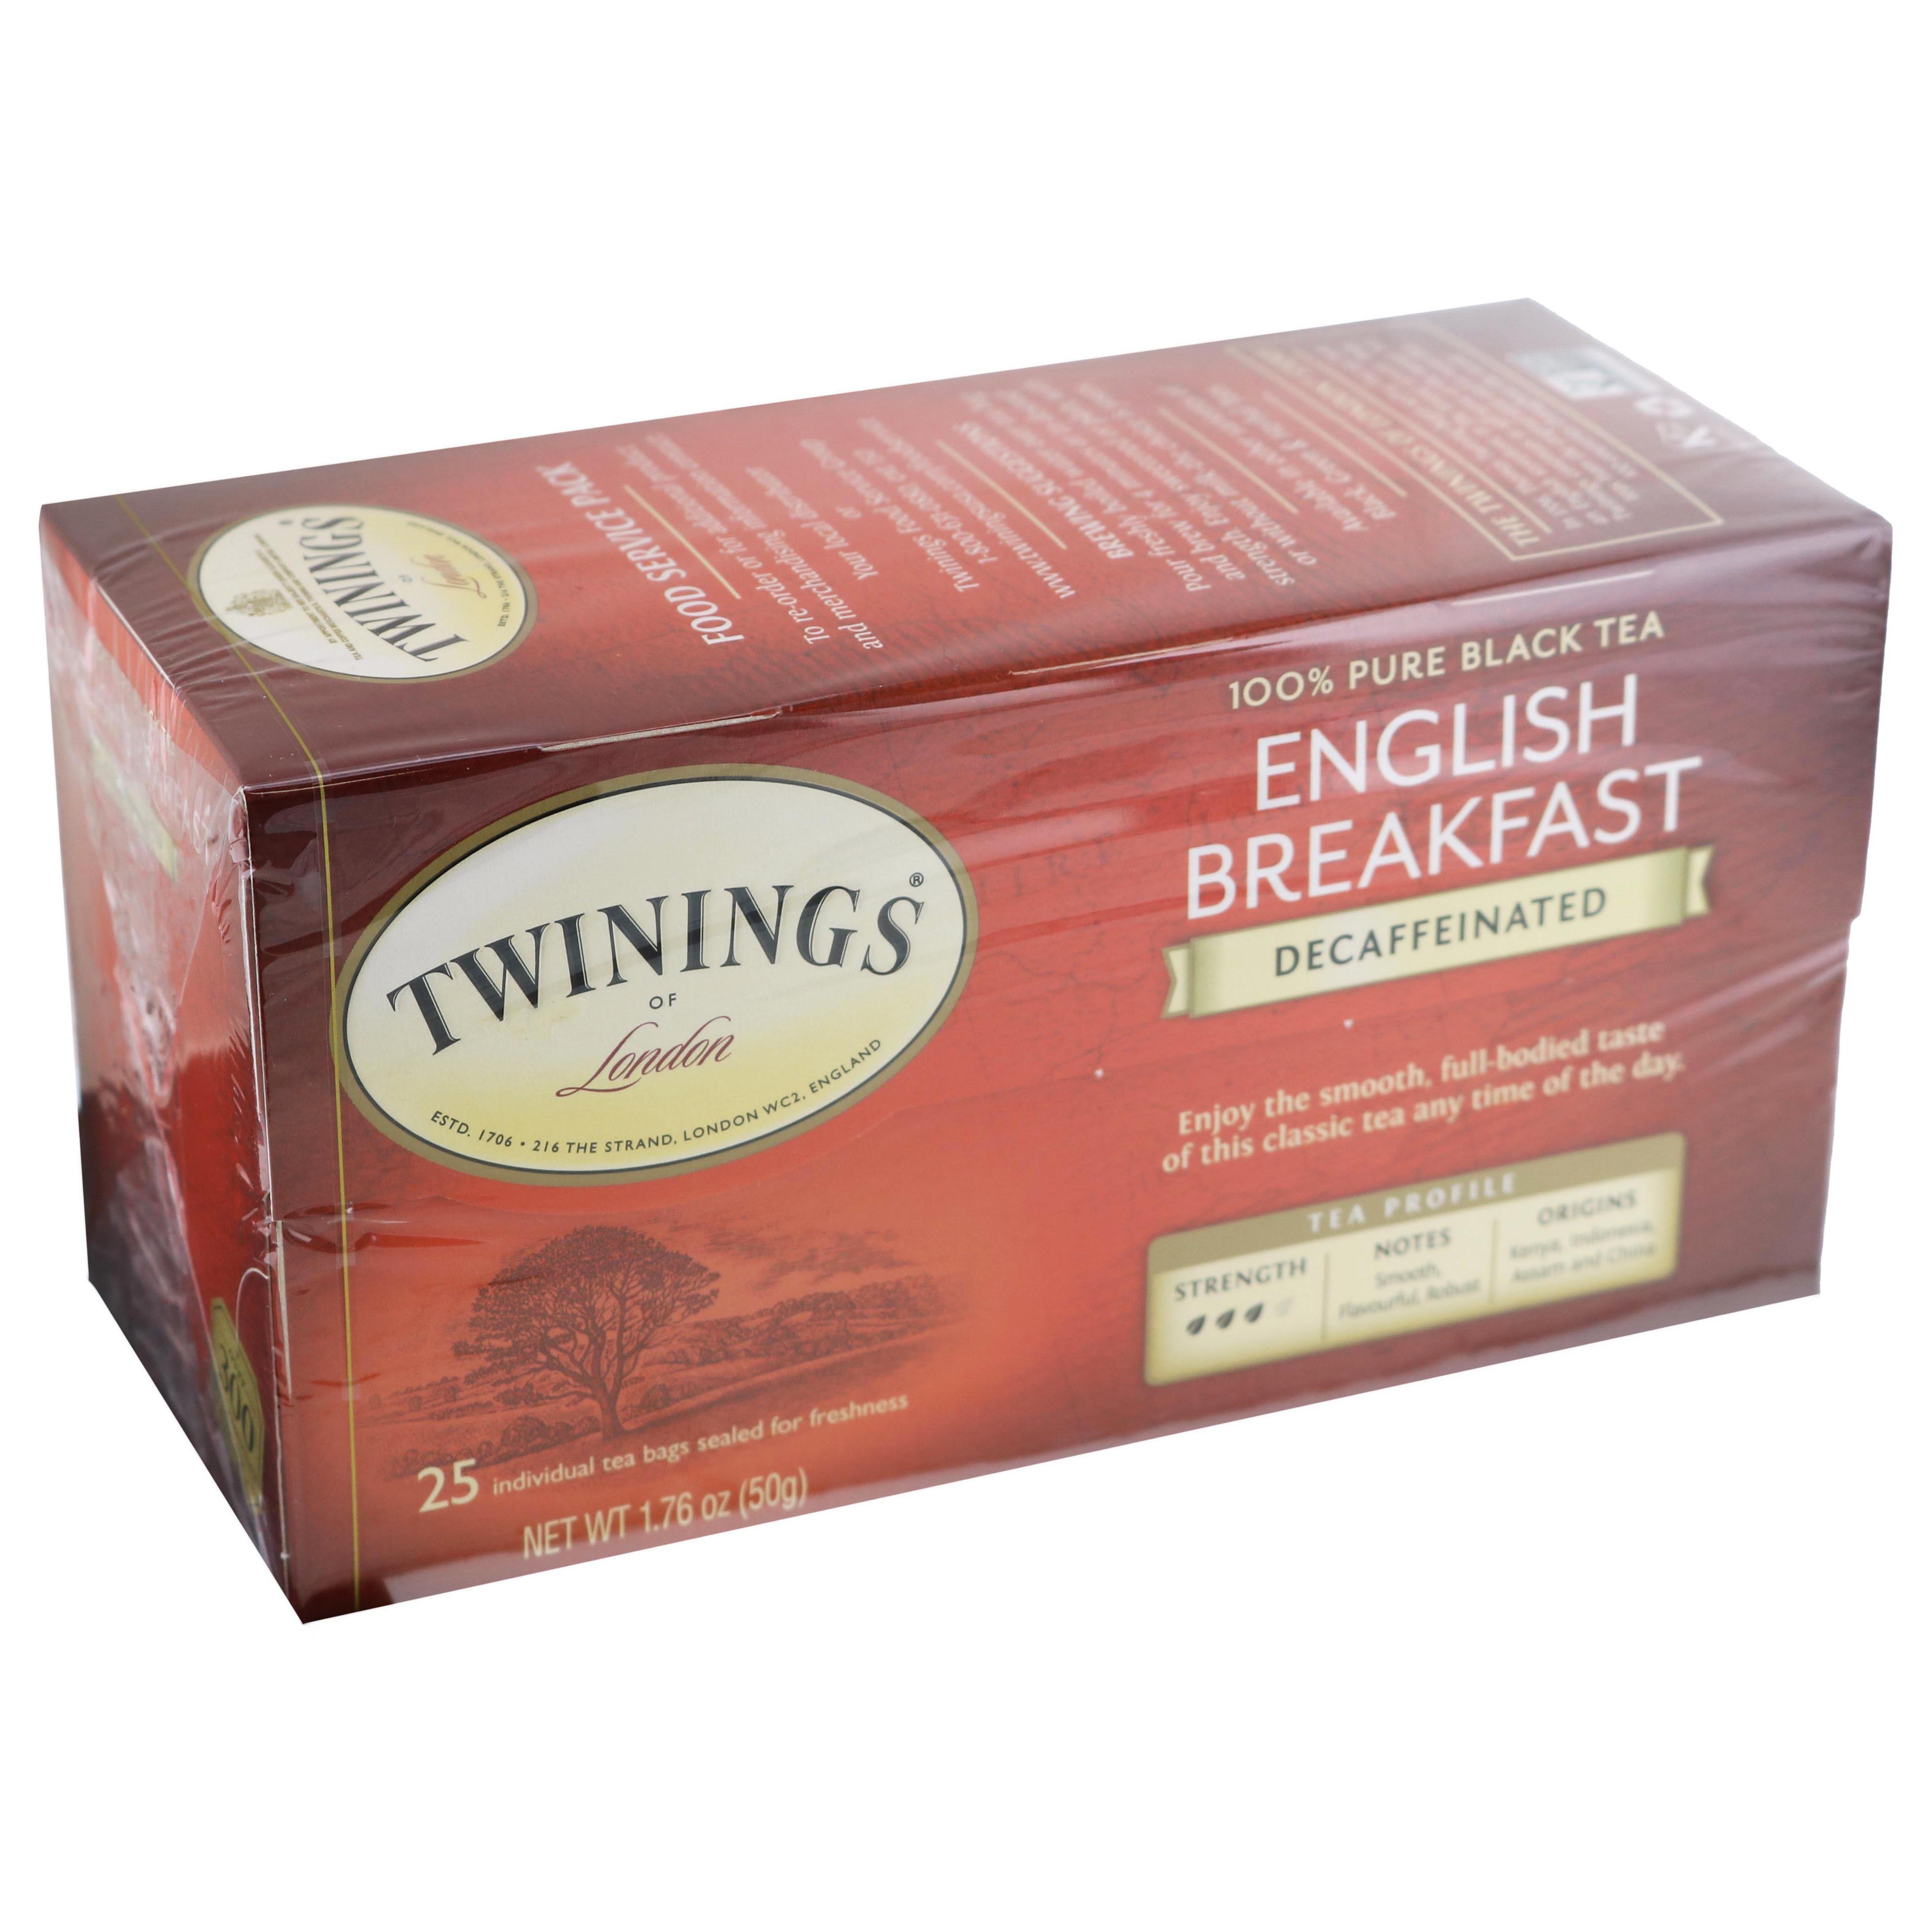 20 ct 070177173517 Decaffeinated Tea Bags Twinings English Breakfast Tea